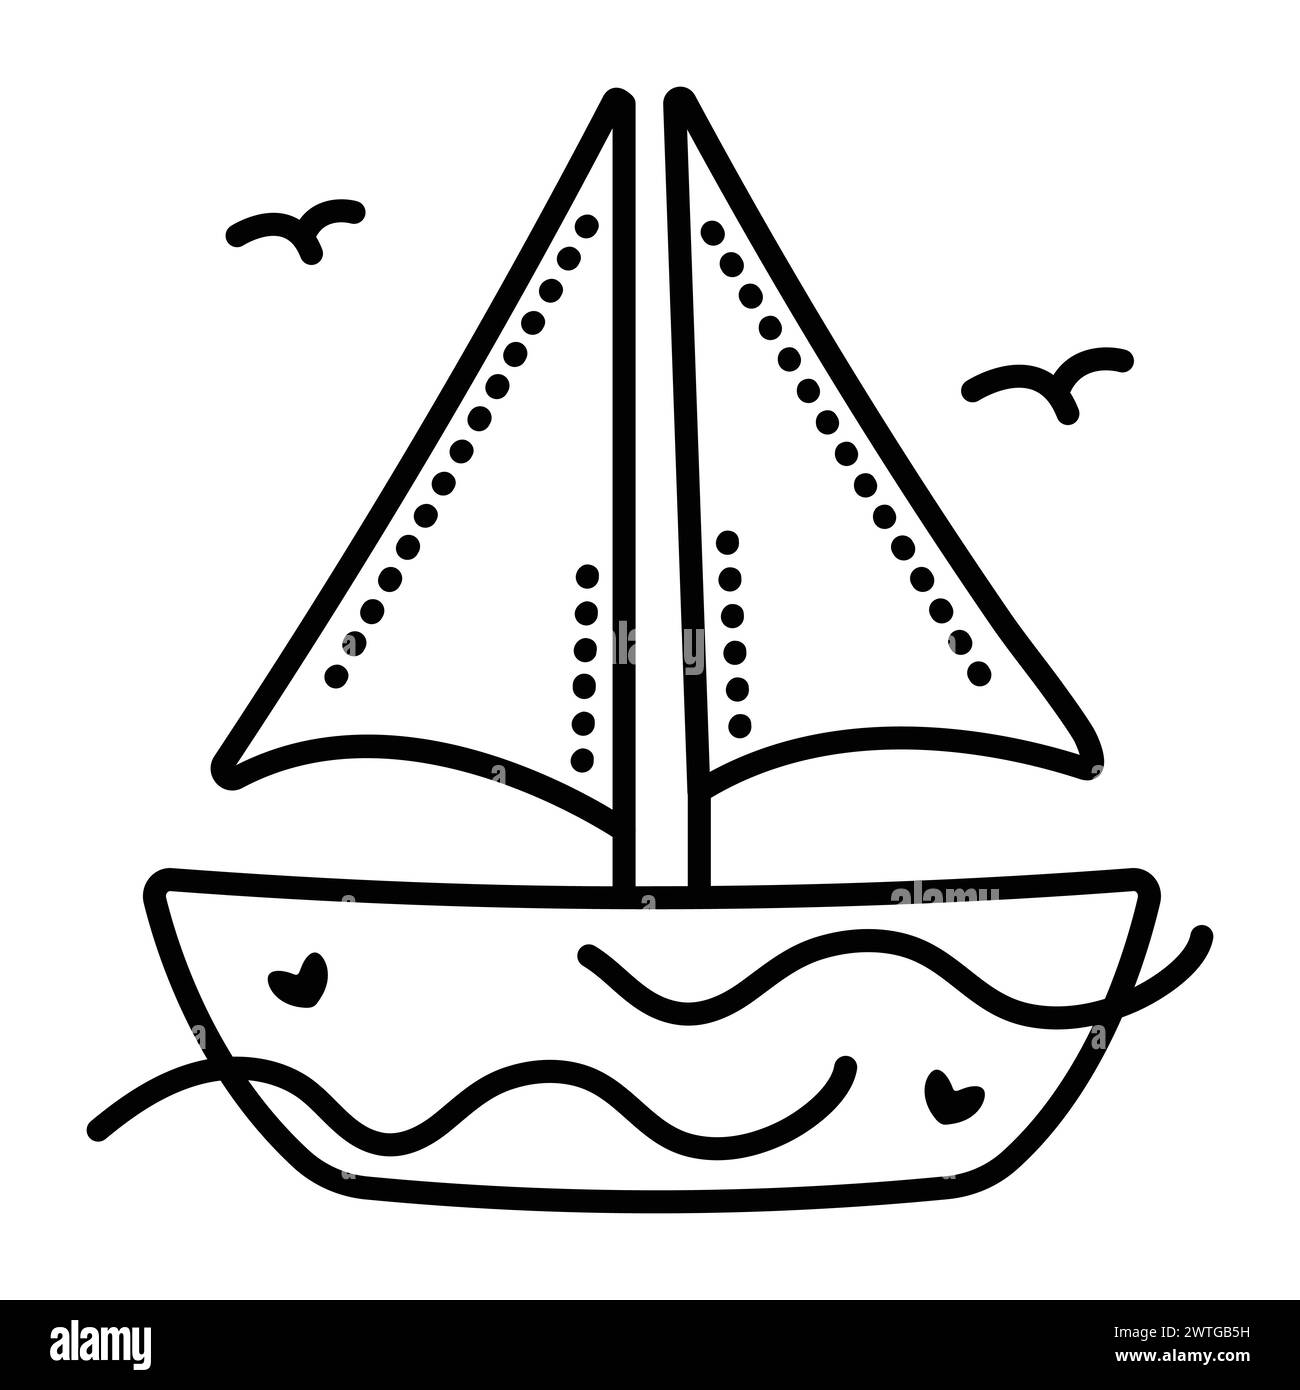 Sailboat black line vector icon, single boat pictogram Stock Vector